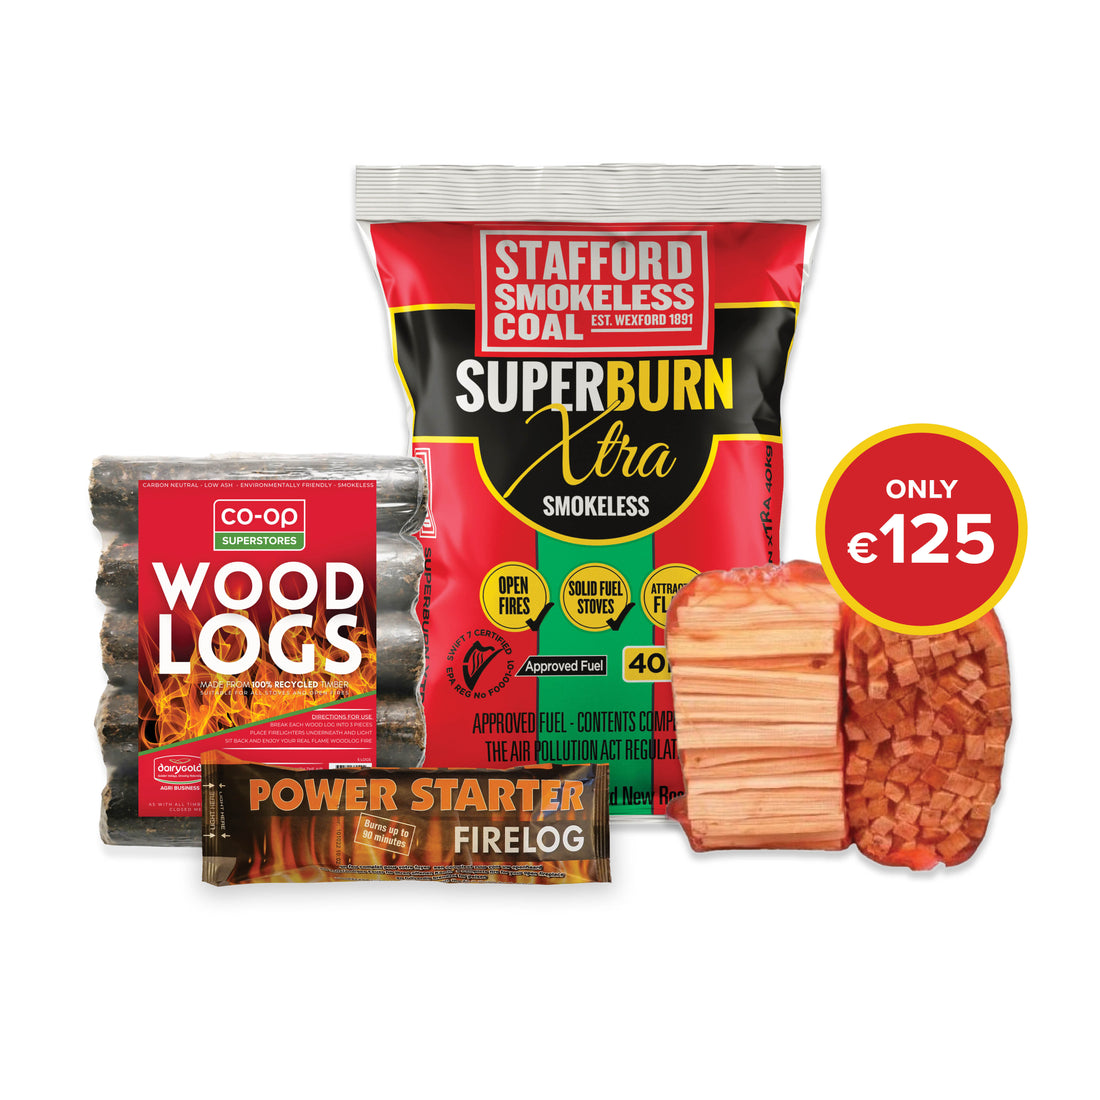 Buy 3 bag Superburn 40kg, 10 Firelogs, 3 bags of Kindling and 3 bale of Woods logs 5s for €125